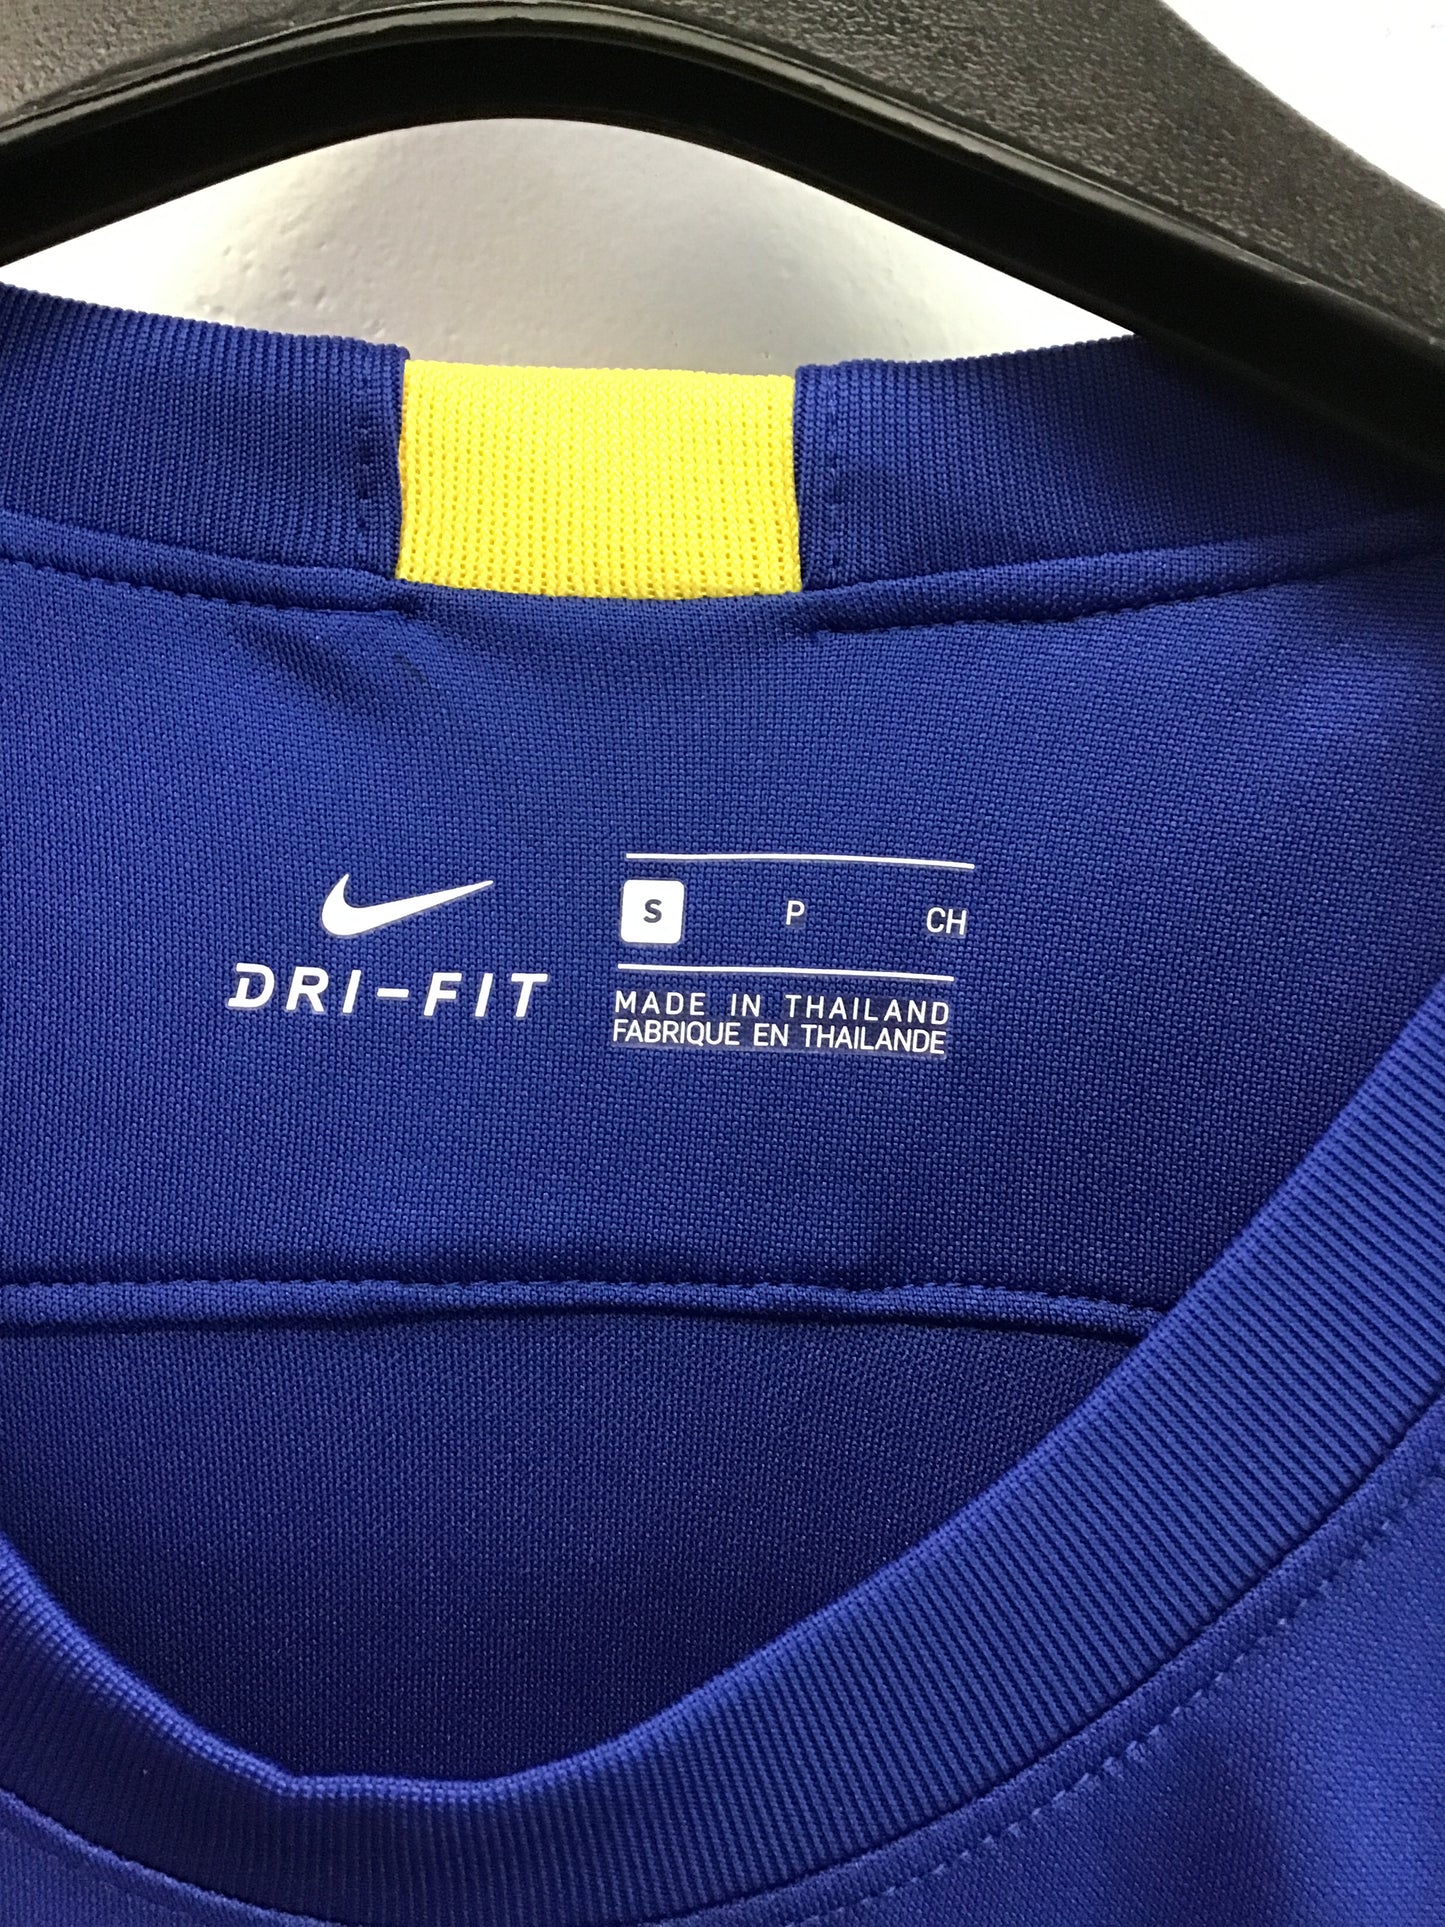 Nike Chelsea FC Dri-Fit Jersey, Size S